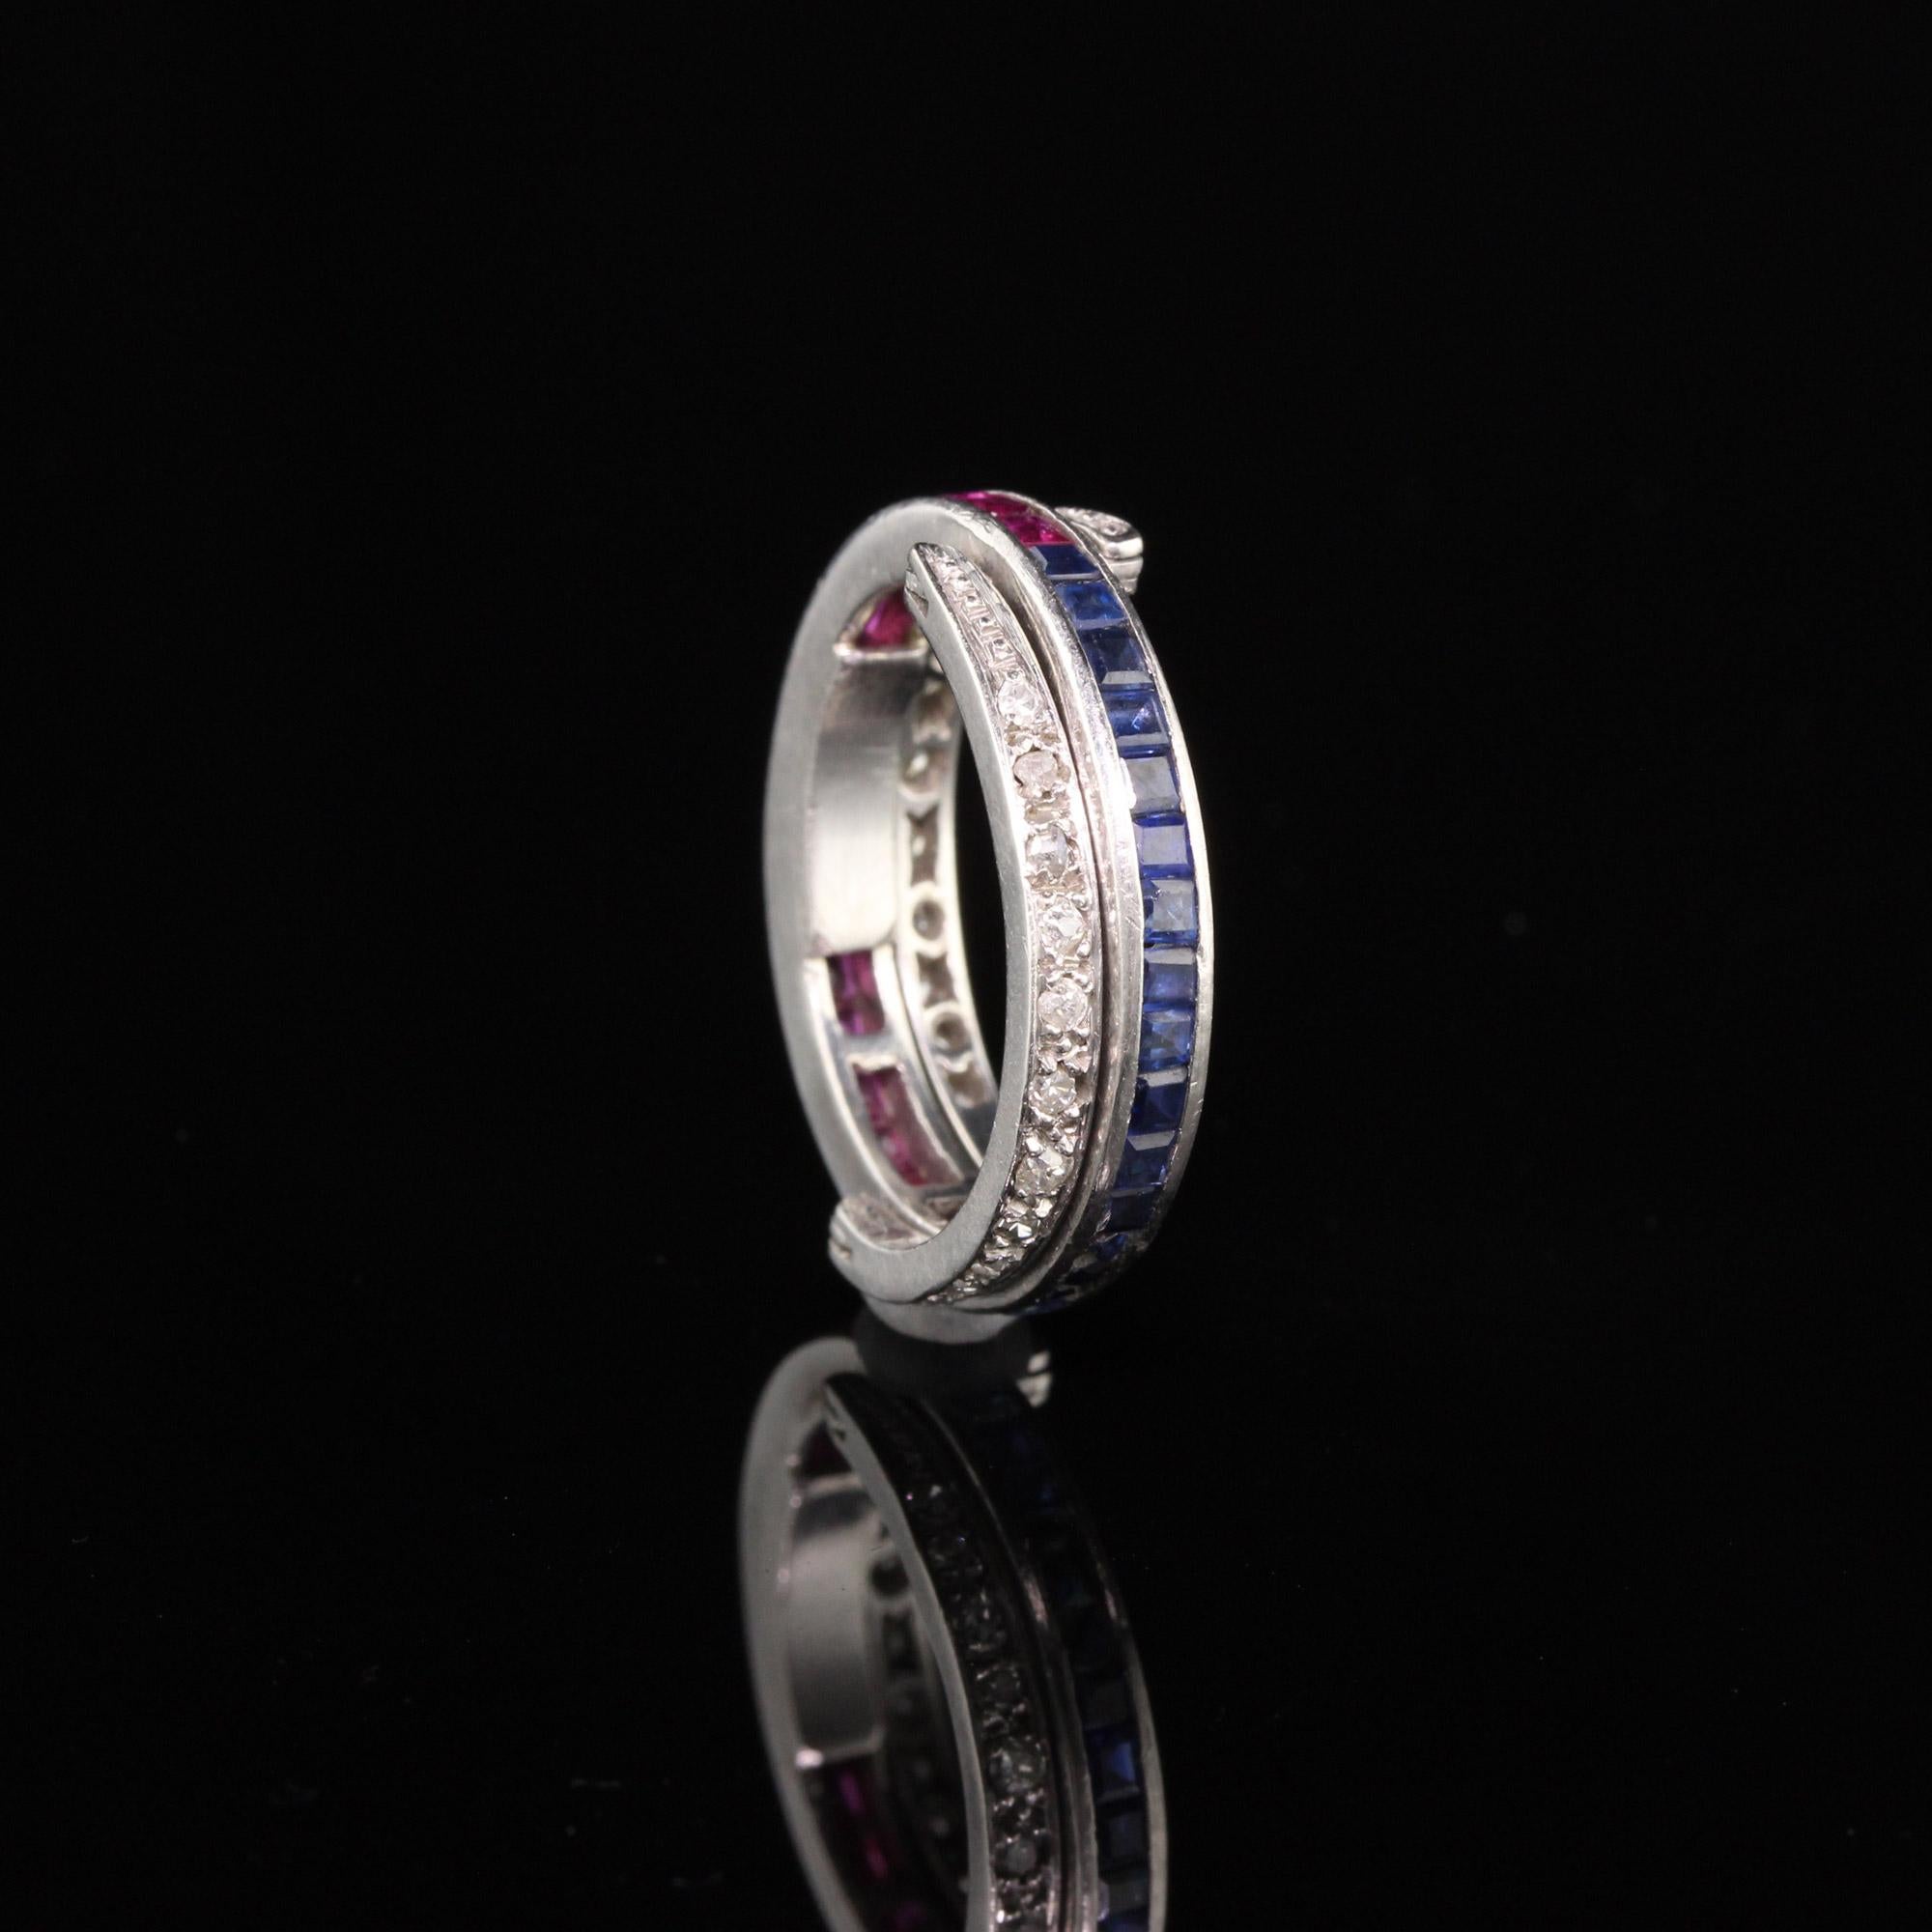 Antique Art Deco Platinum Diamond, Sapphire, and Ruby Flip Ring - Size 6.25 For Sale 2